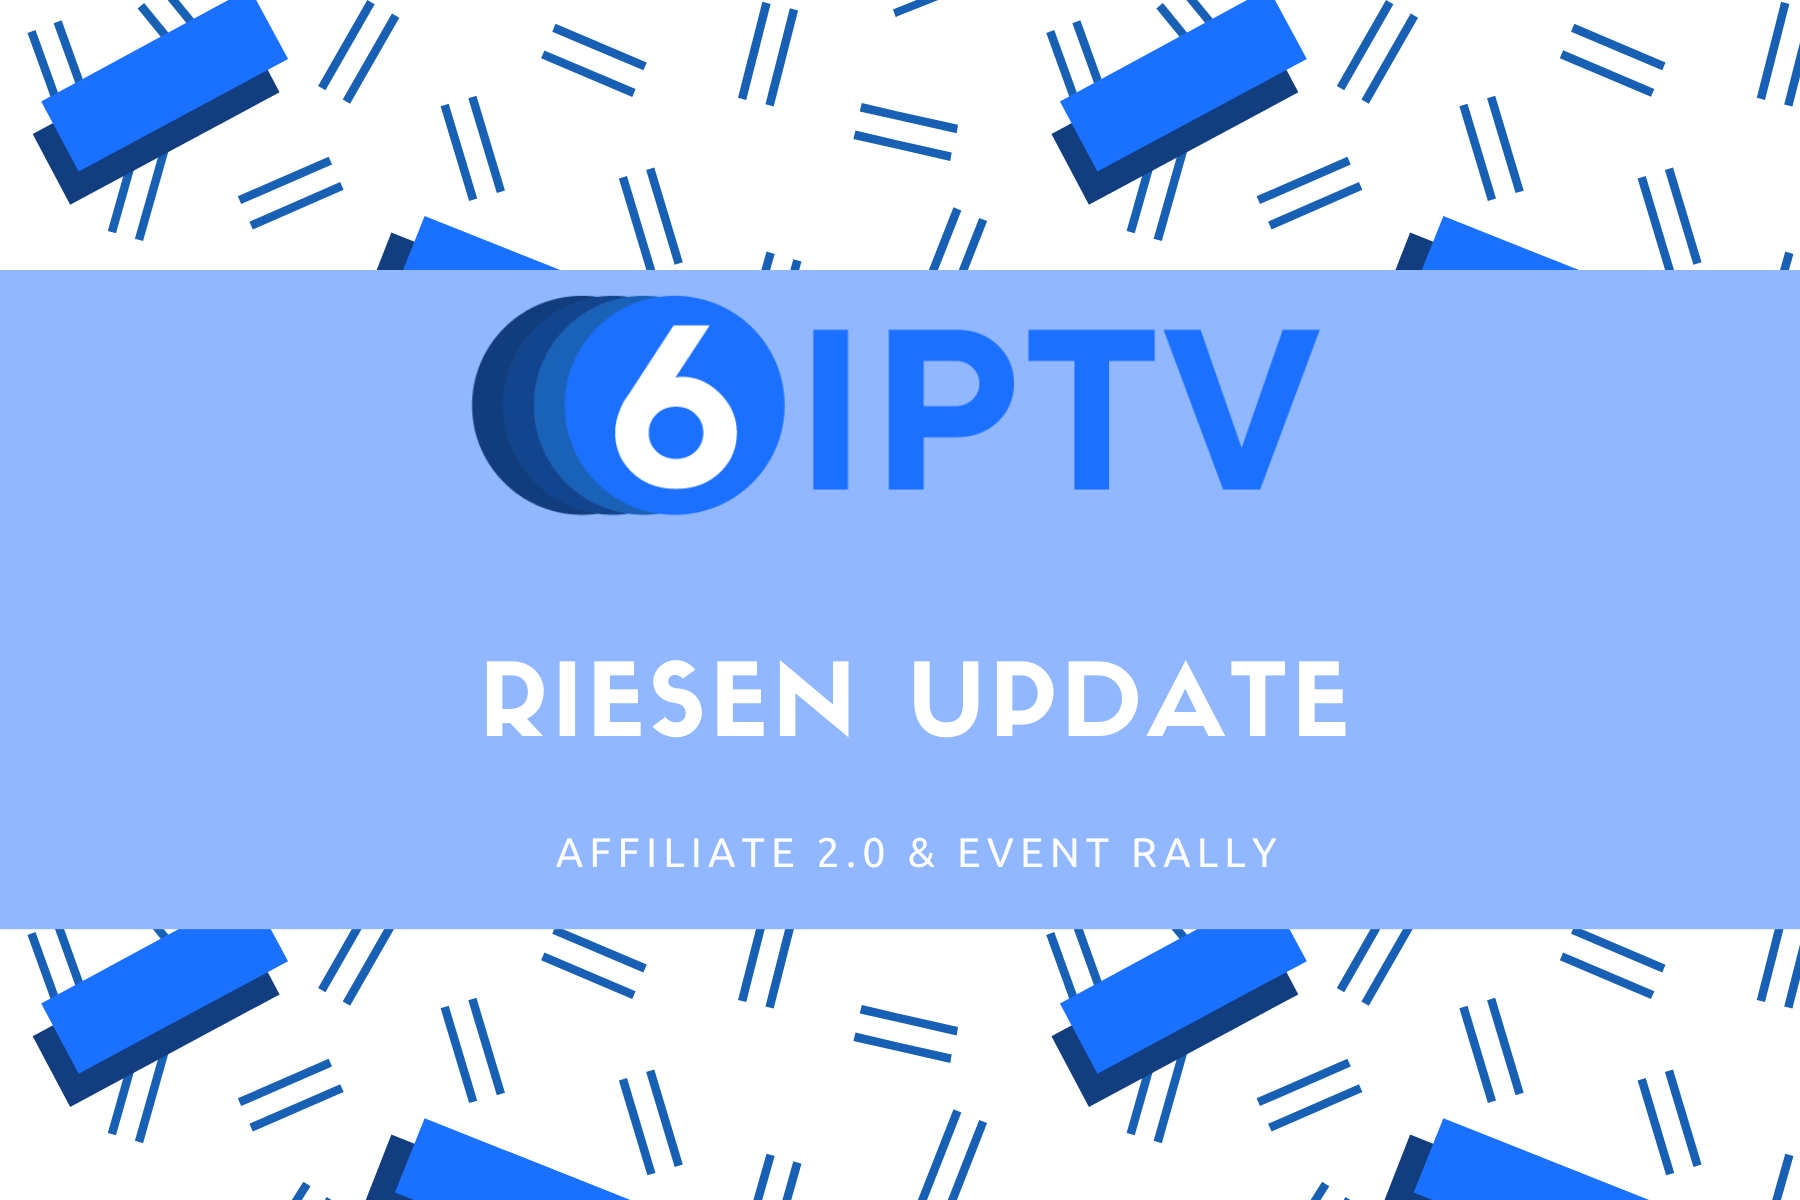 6IPTV Riesen Update – Affiliate 2.0, Event uvm.